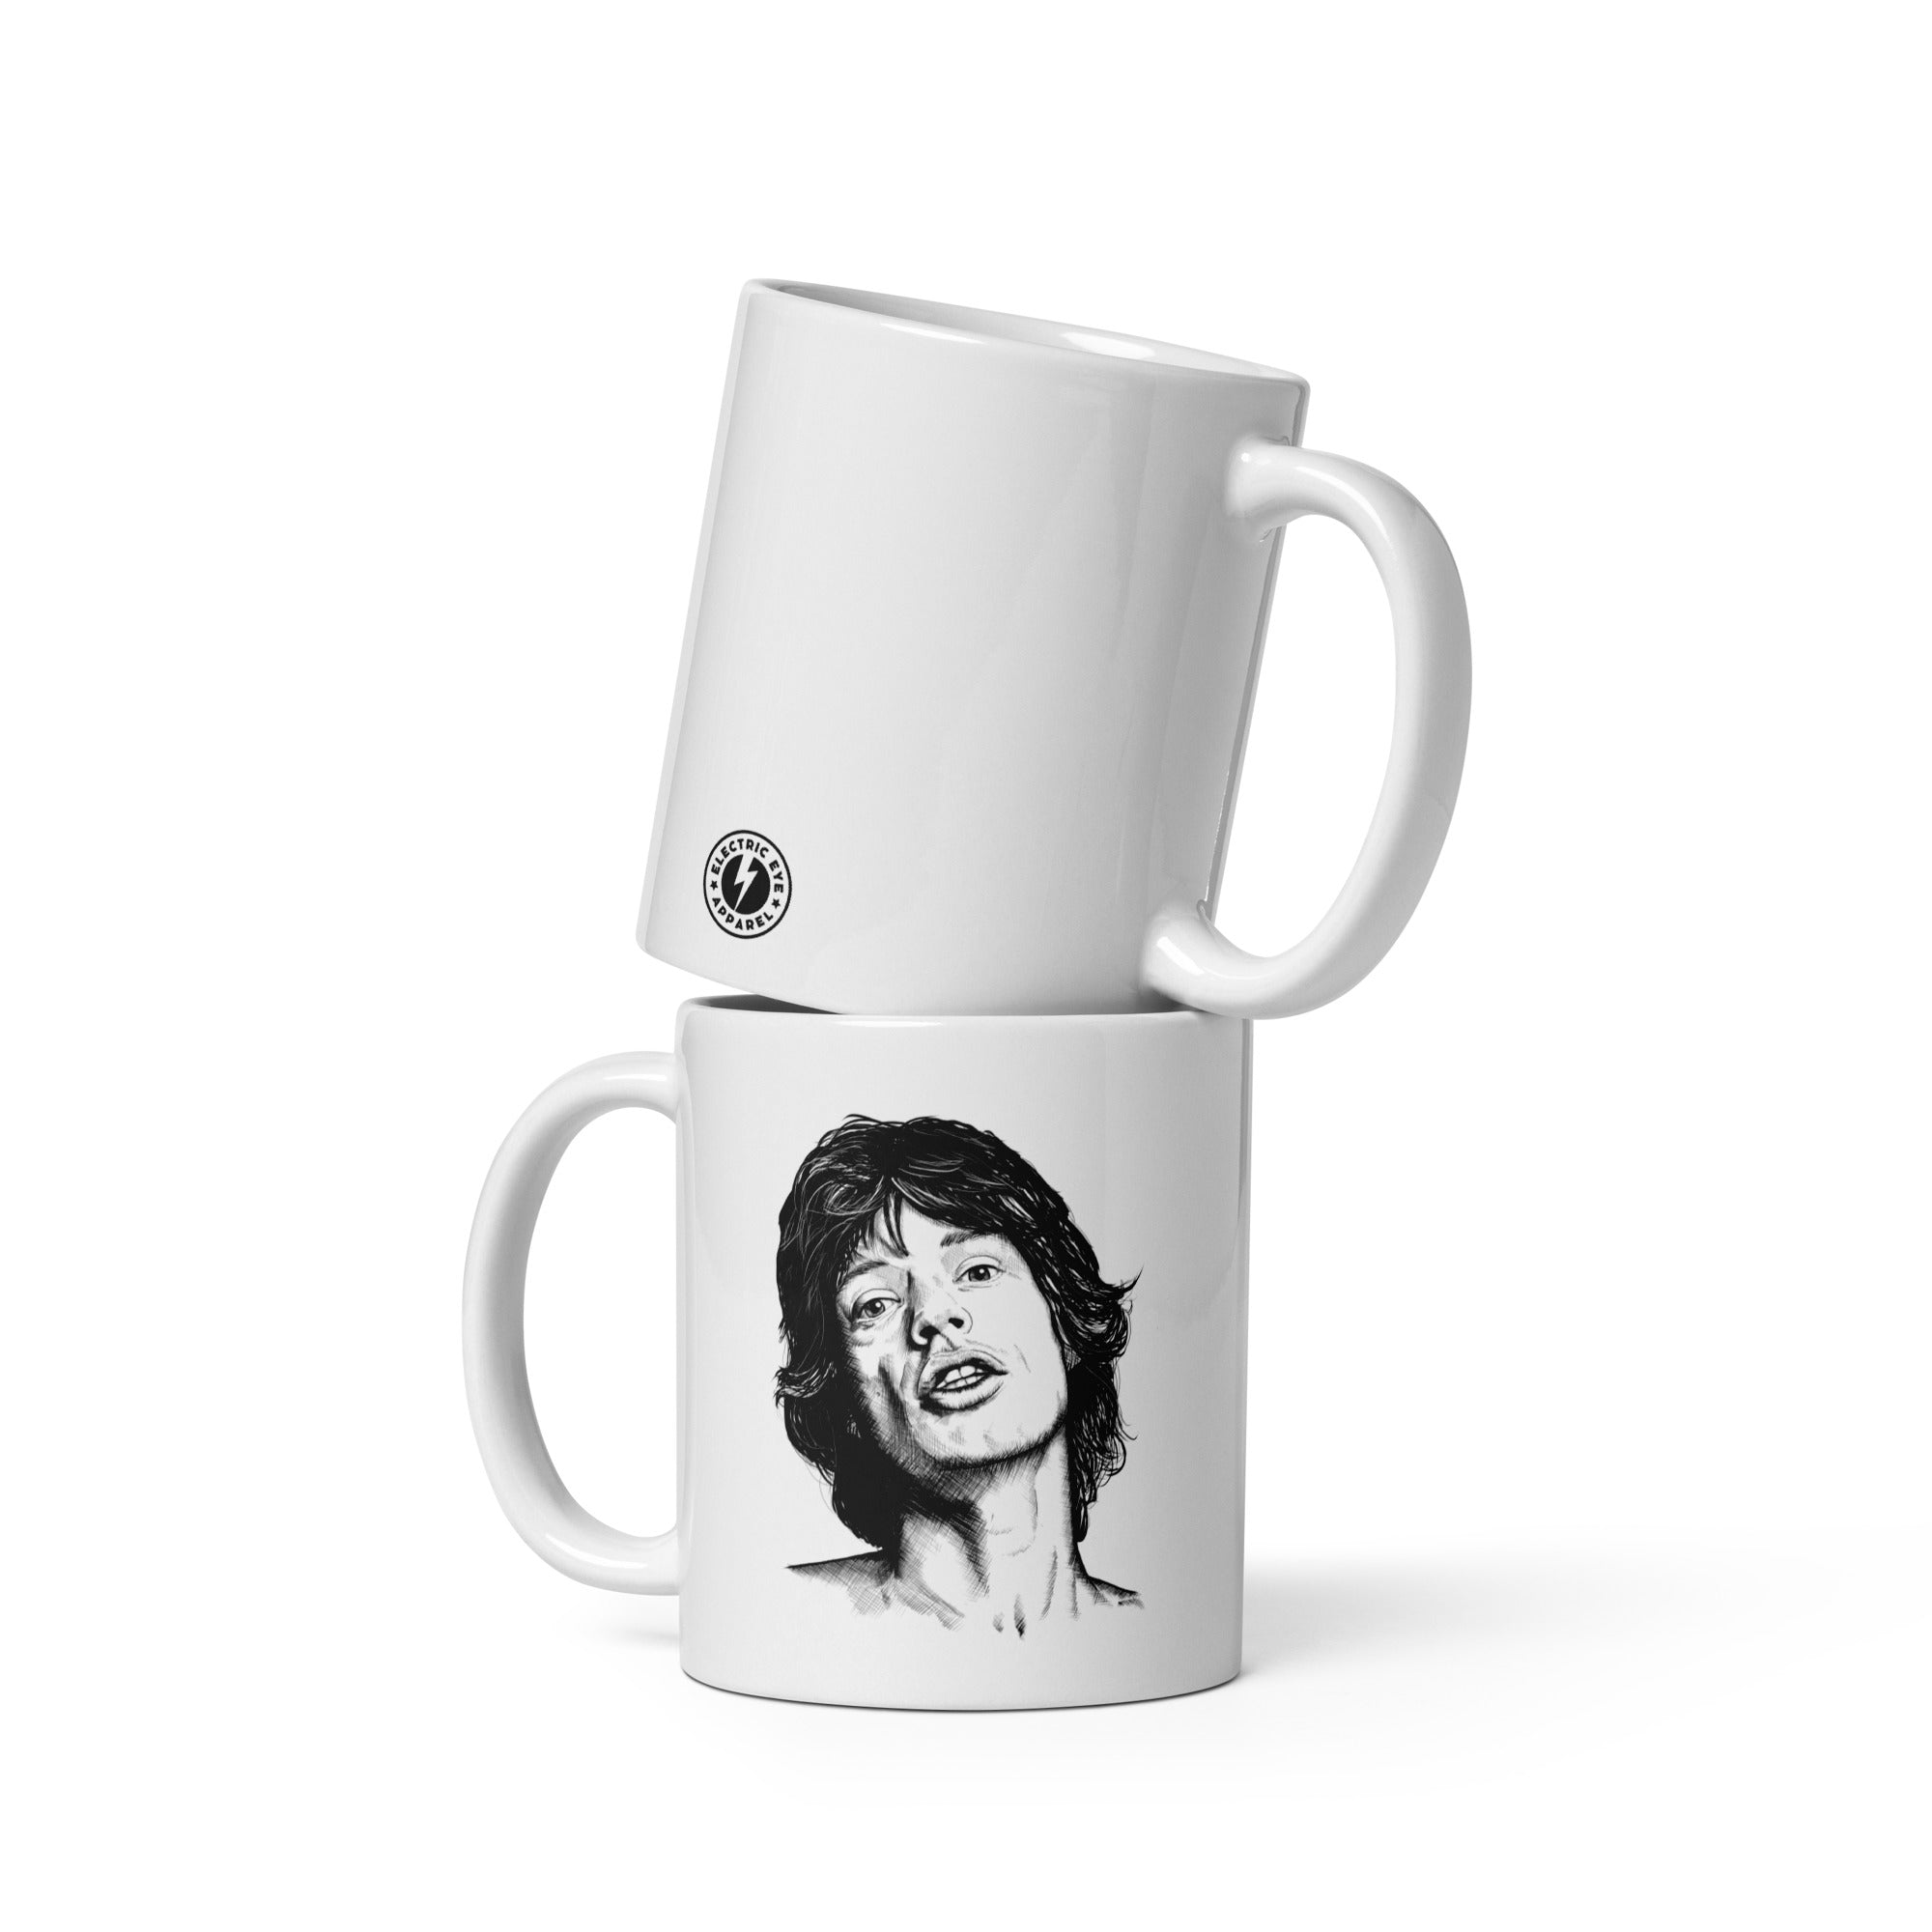 Mick Jagger Pop Art Drawing Premium Printed White glossy mug